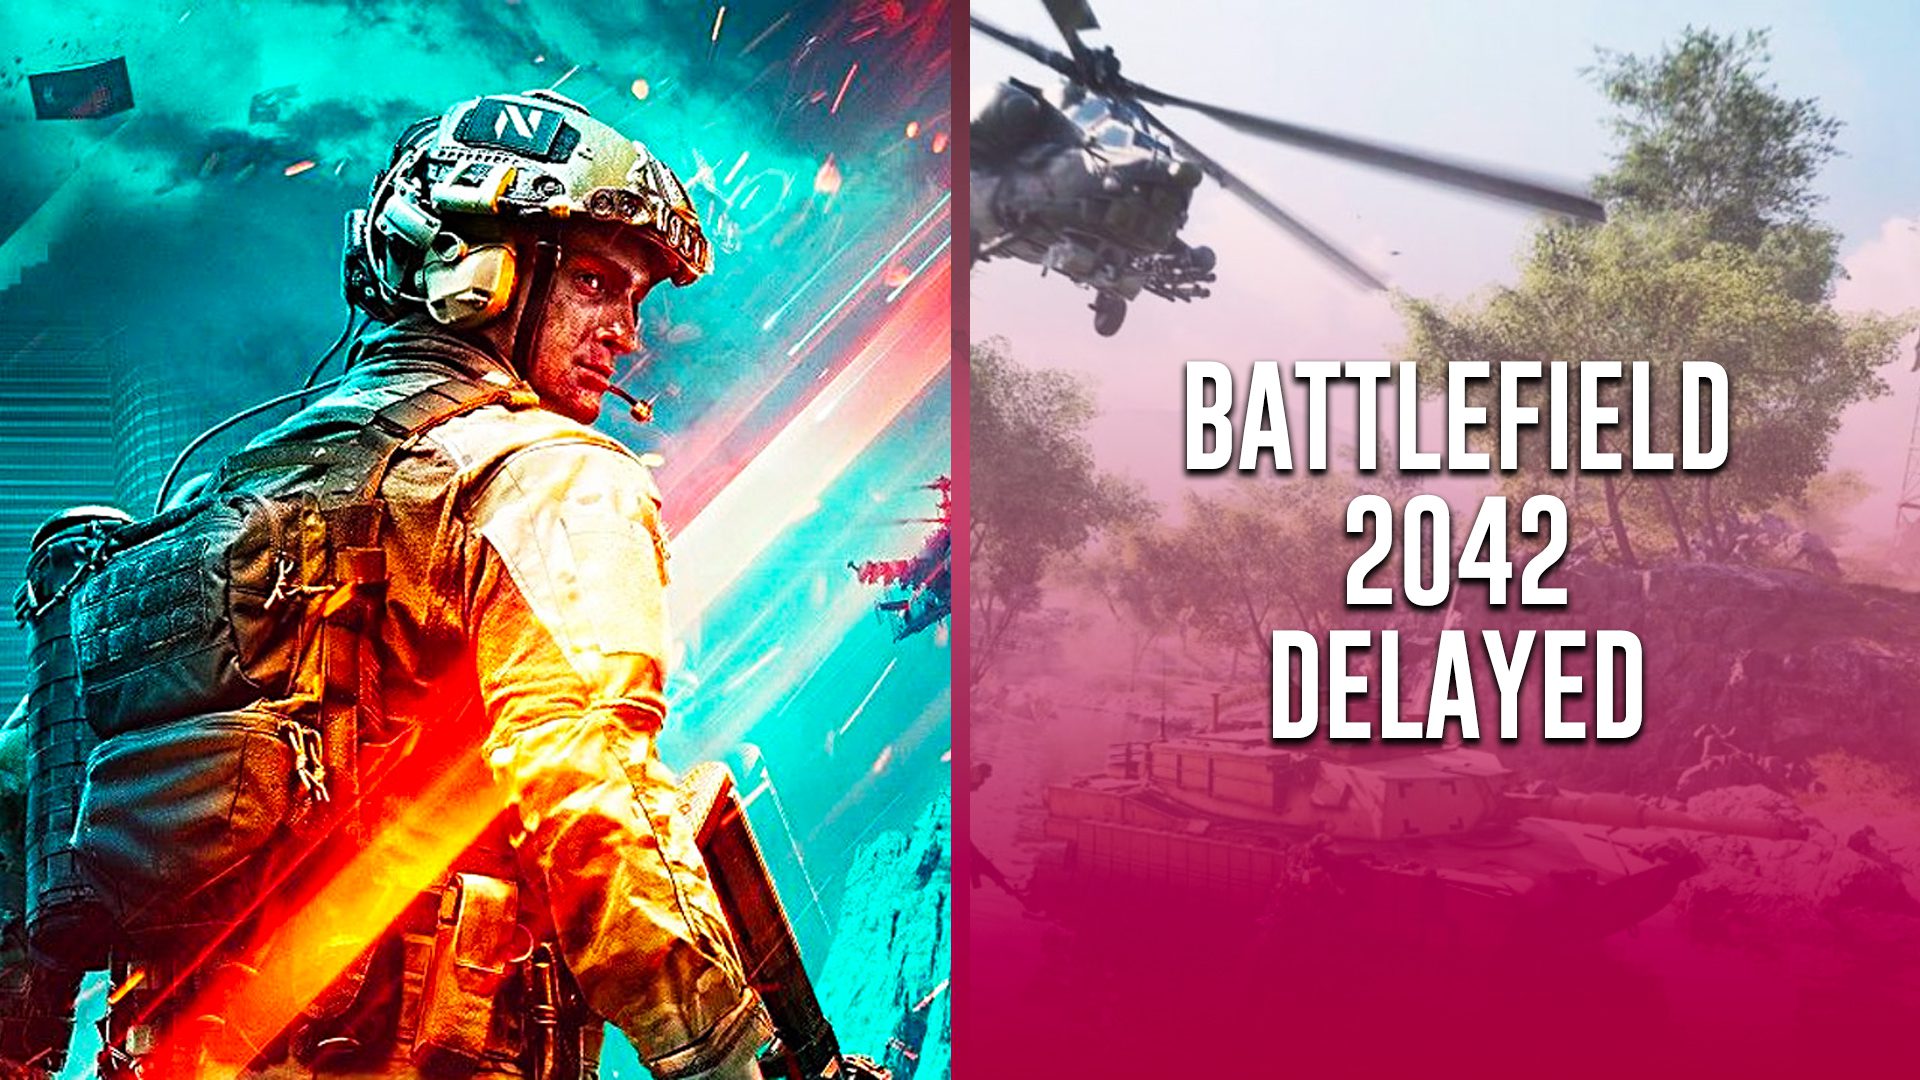 Battlefield 2042 split screen images